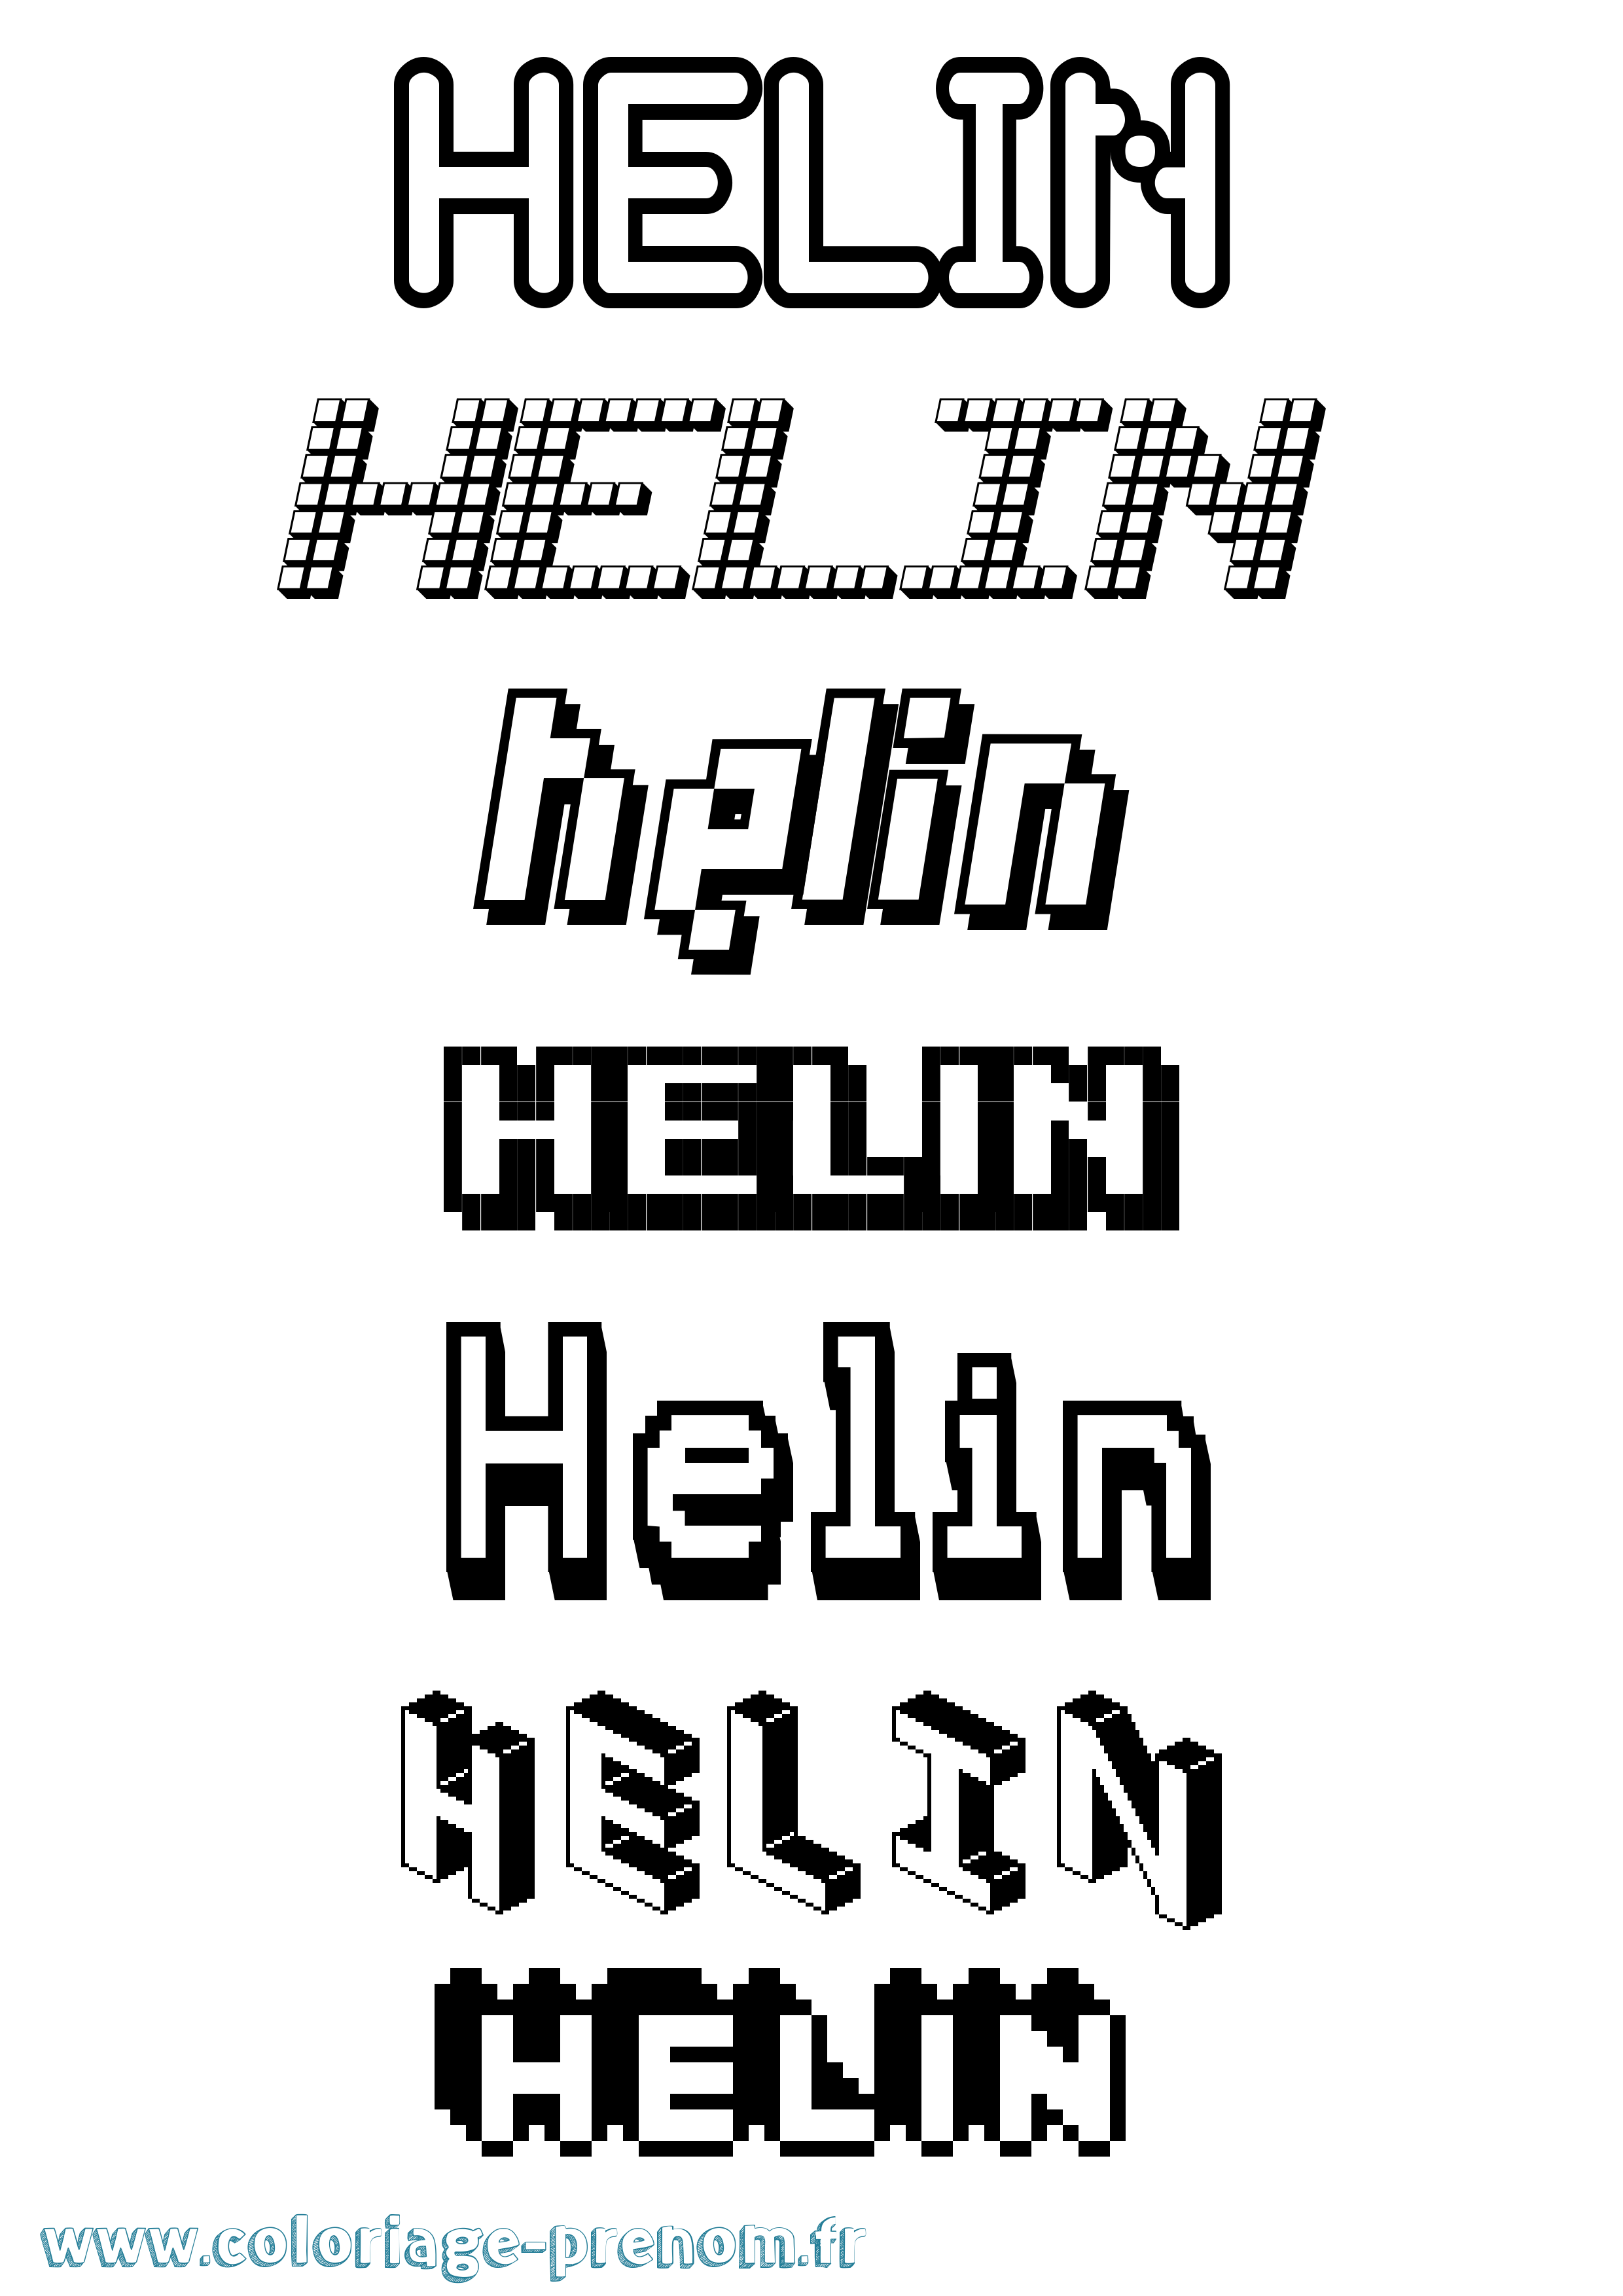 Coloriage prénom Helin Pixel